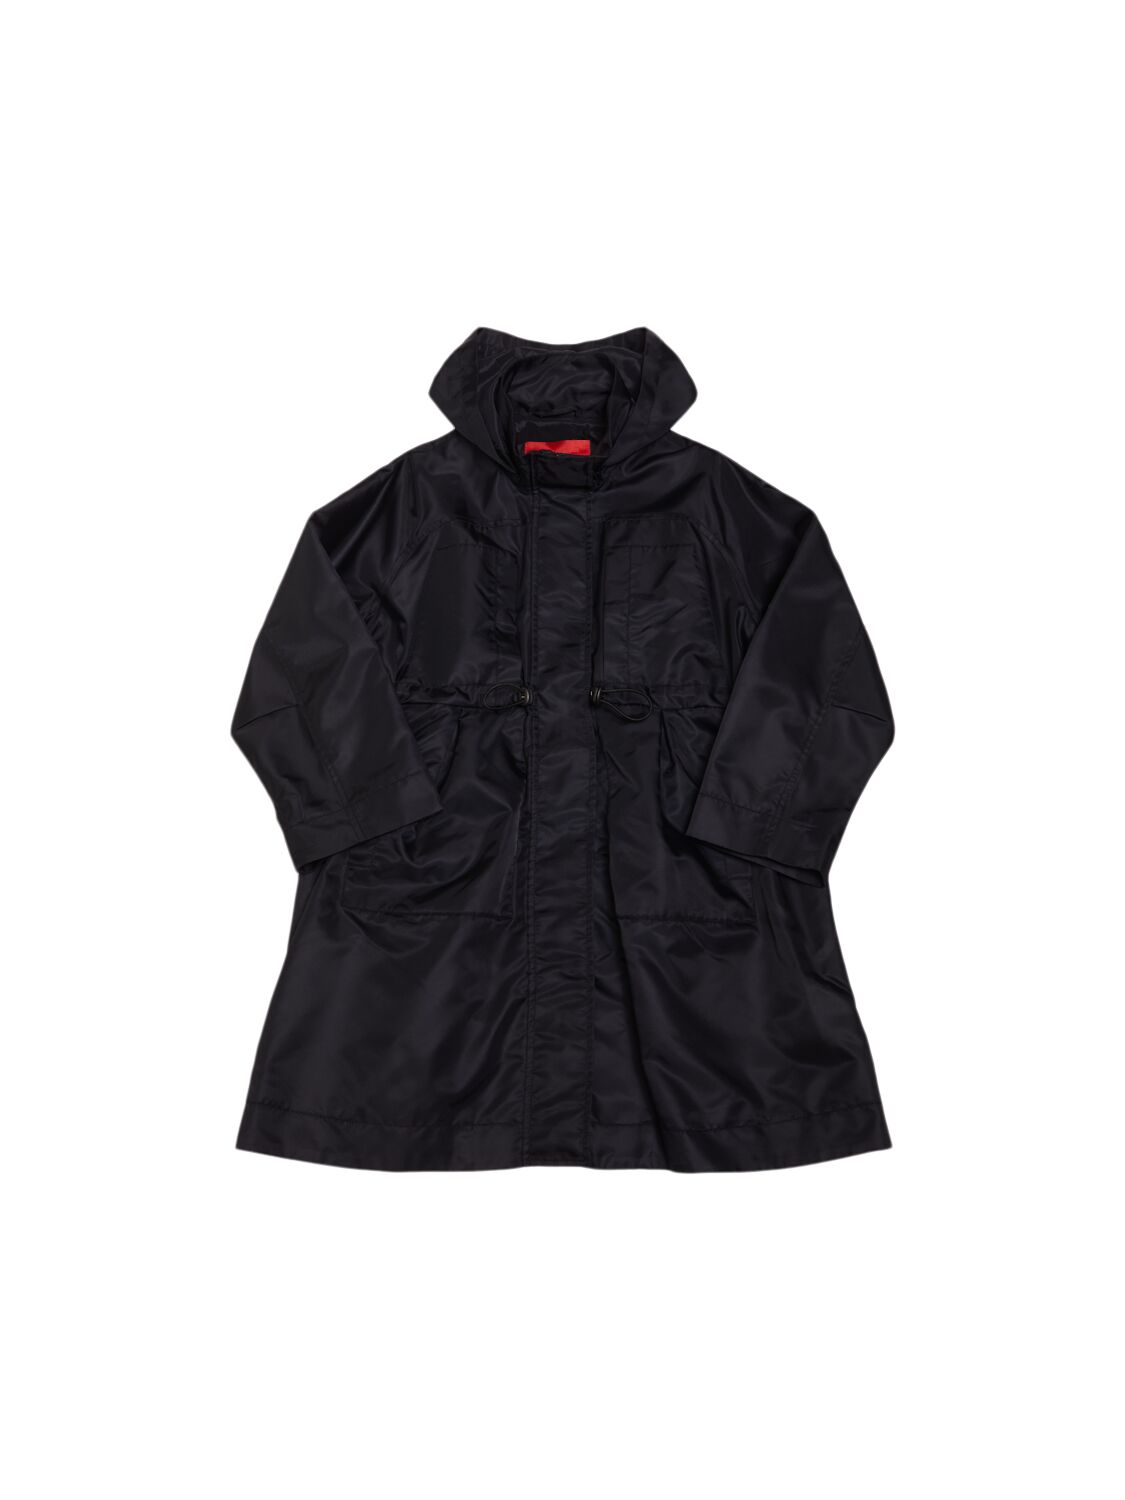 Max & Co Kids' Hooded Nylon Raincoat In Black